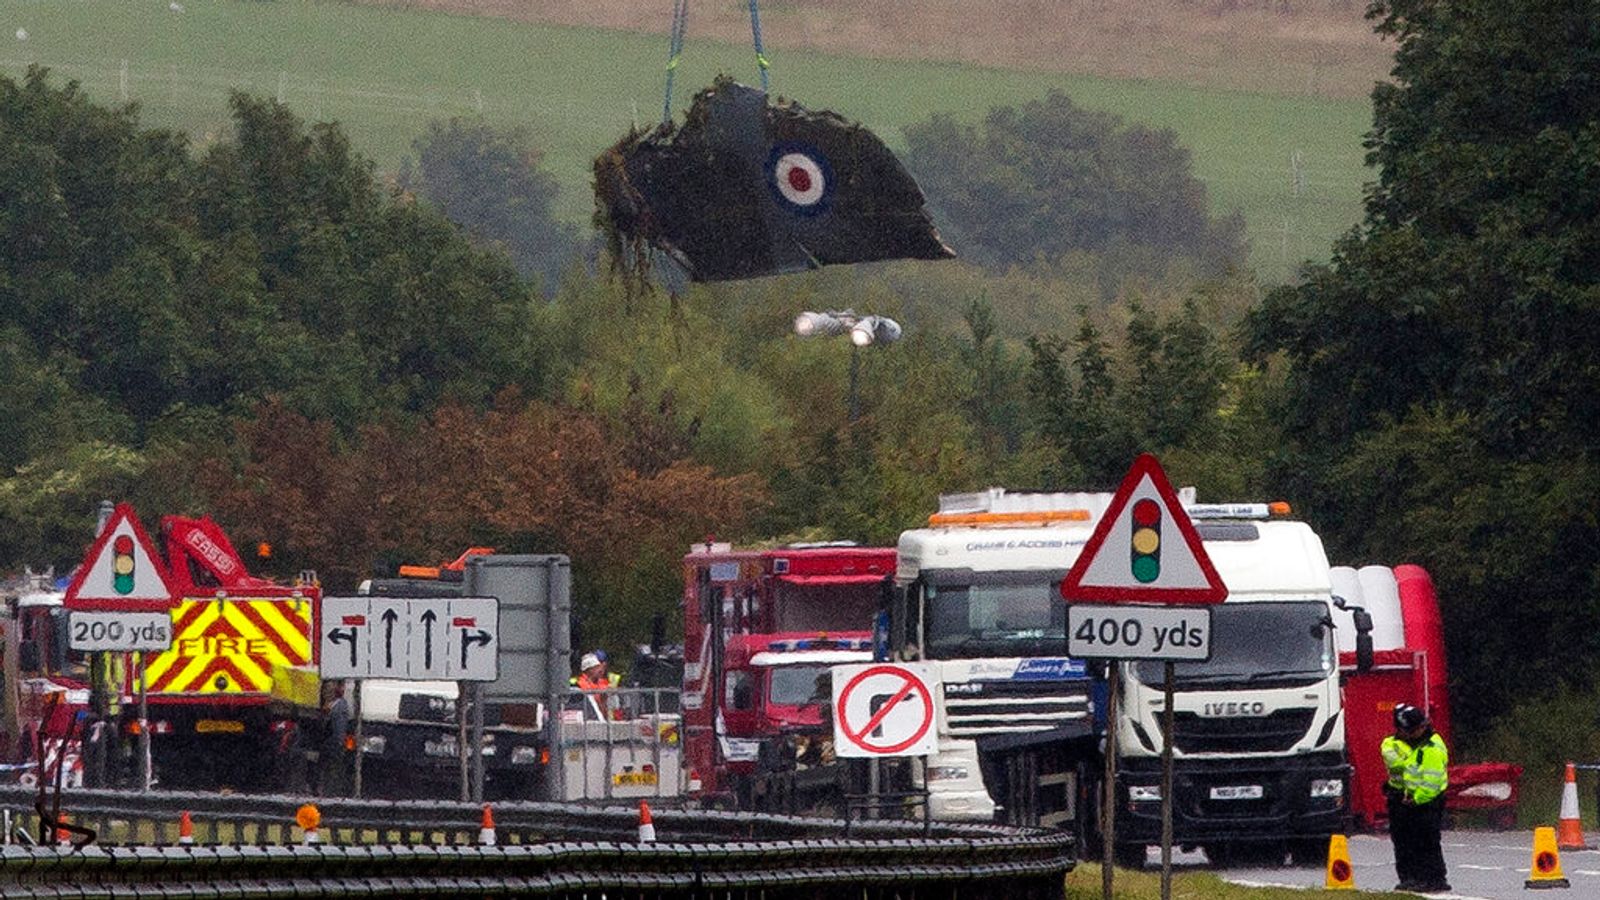 ‘Series of gross errors’ during ‘incorrect manoeuvre’ led to Shoreham Airshow deaths – coroner | UK News